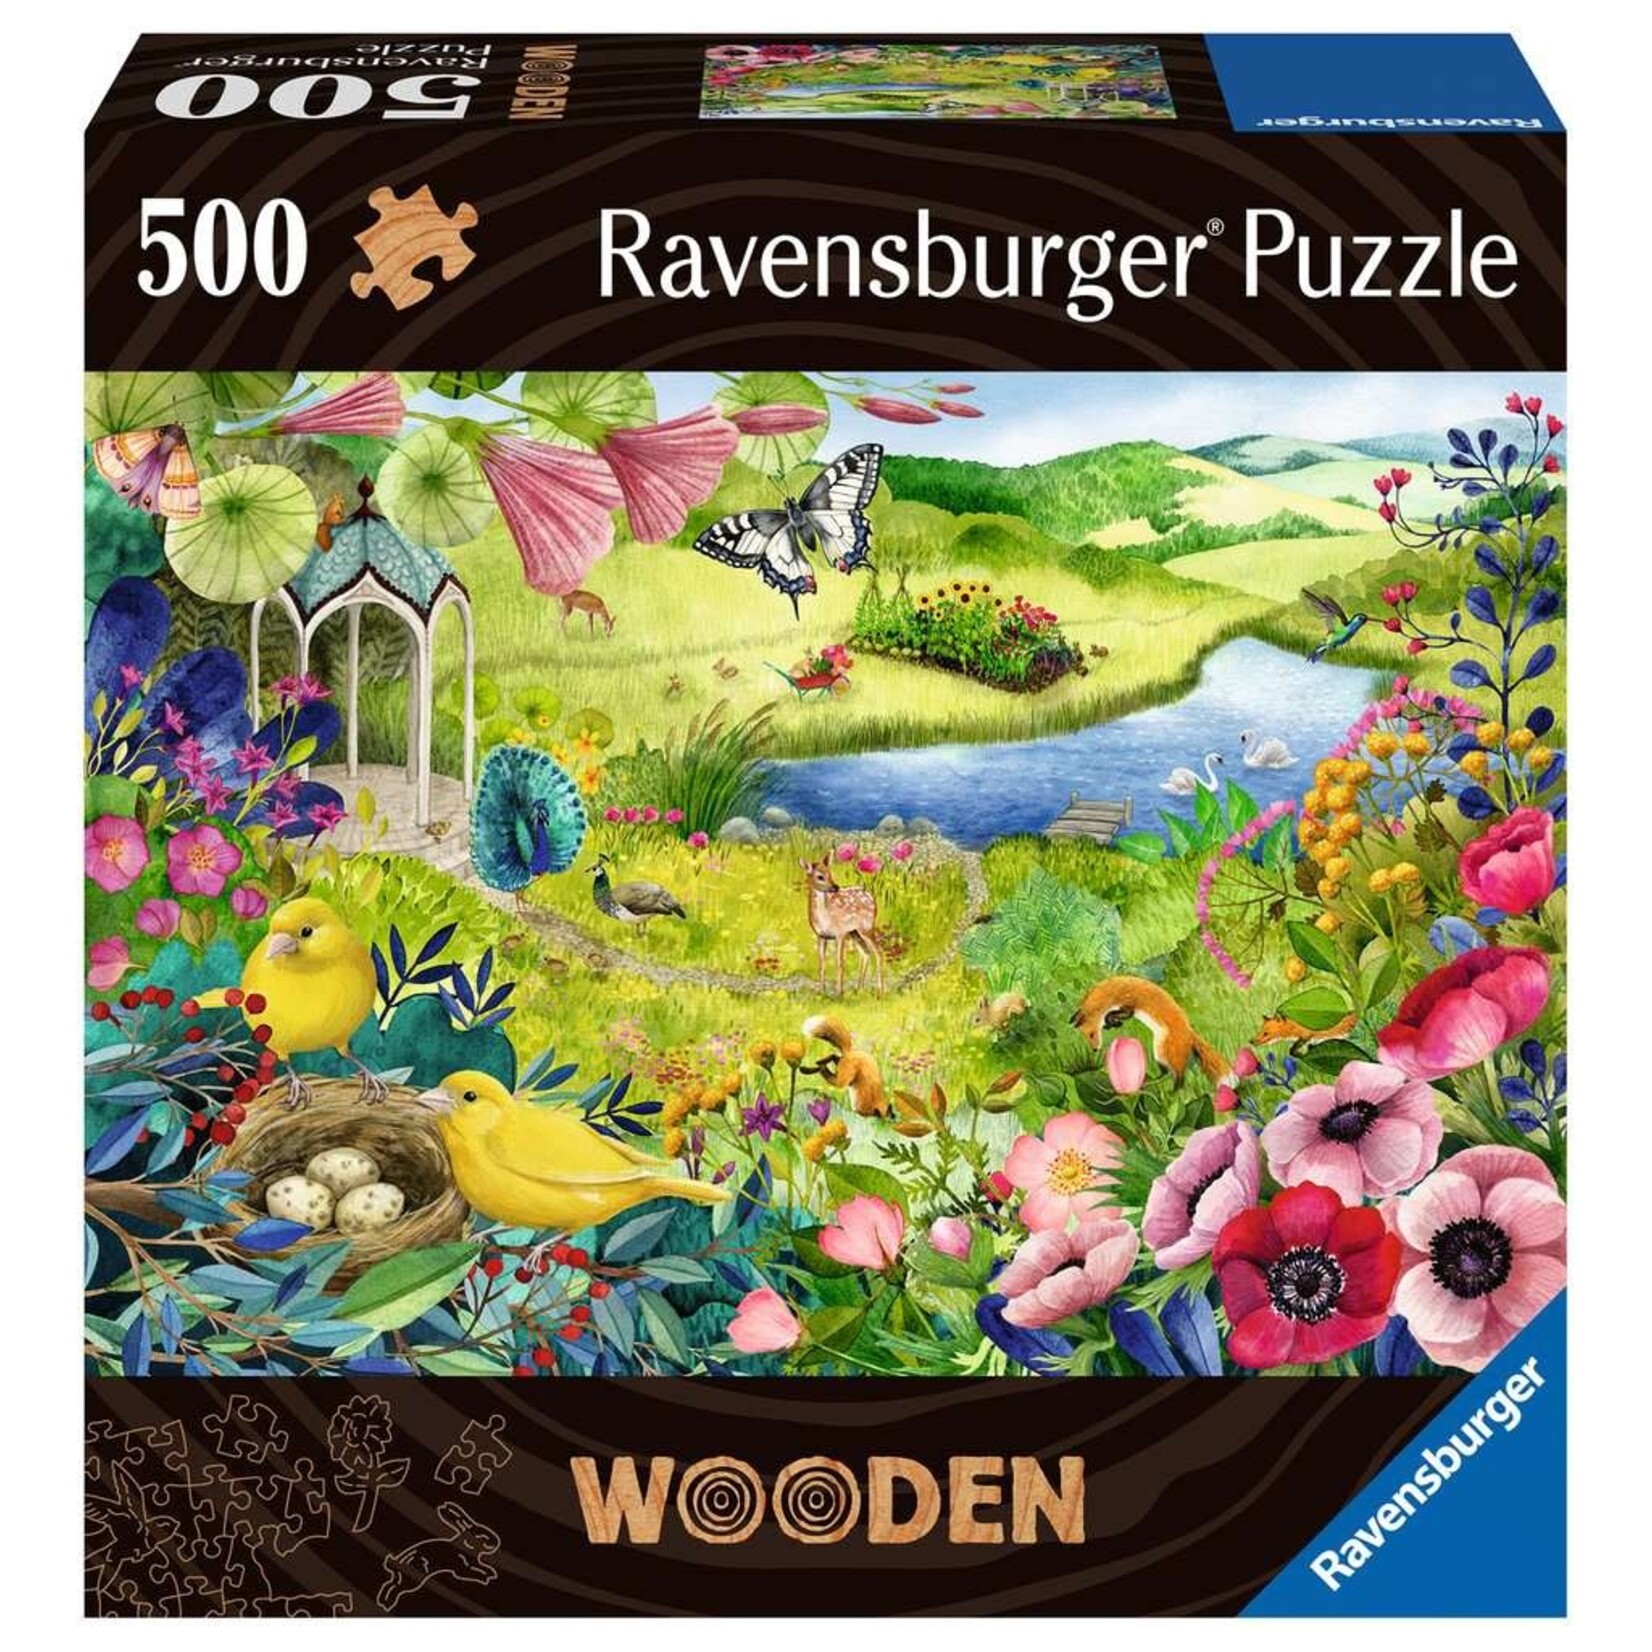 WOOD: Nature Garden 500 Piece Wooden Puzzle